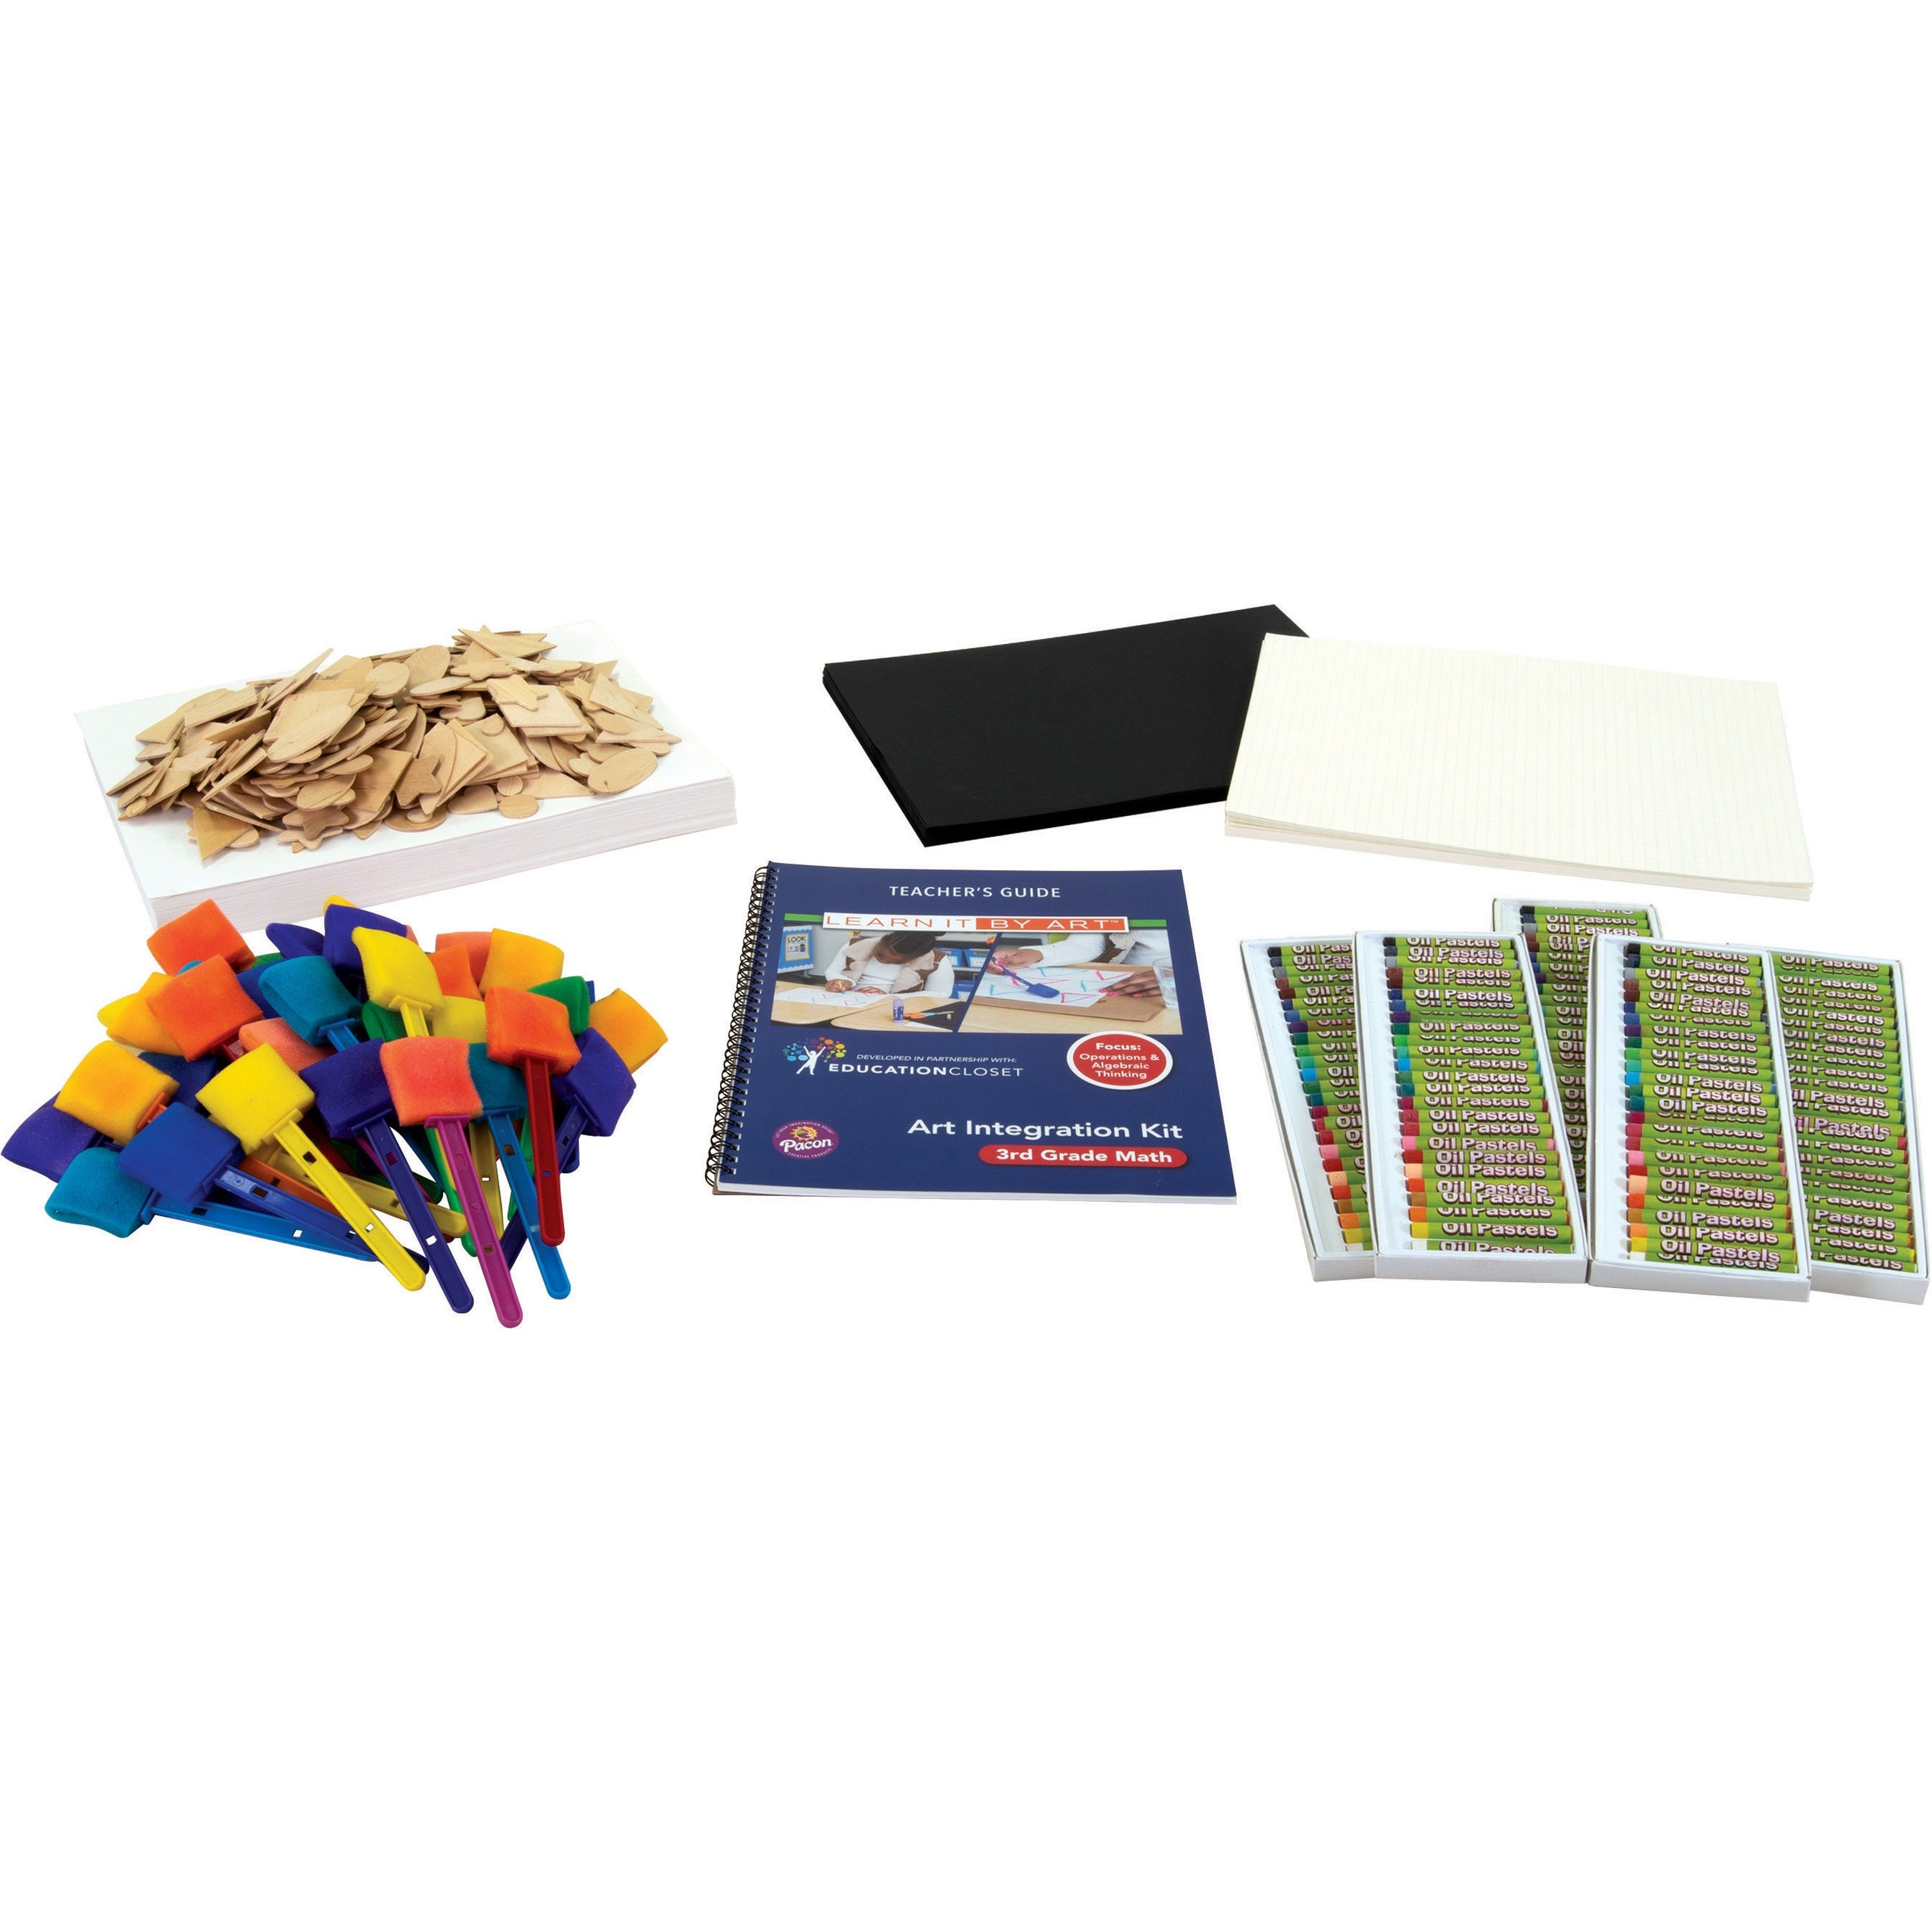 Pacon 3rd-Grade Math Art Integration Kit - Skill Learning: Science, Technology, Engineering, Mathematics, Planning - 1 / Kit